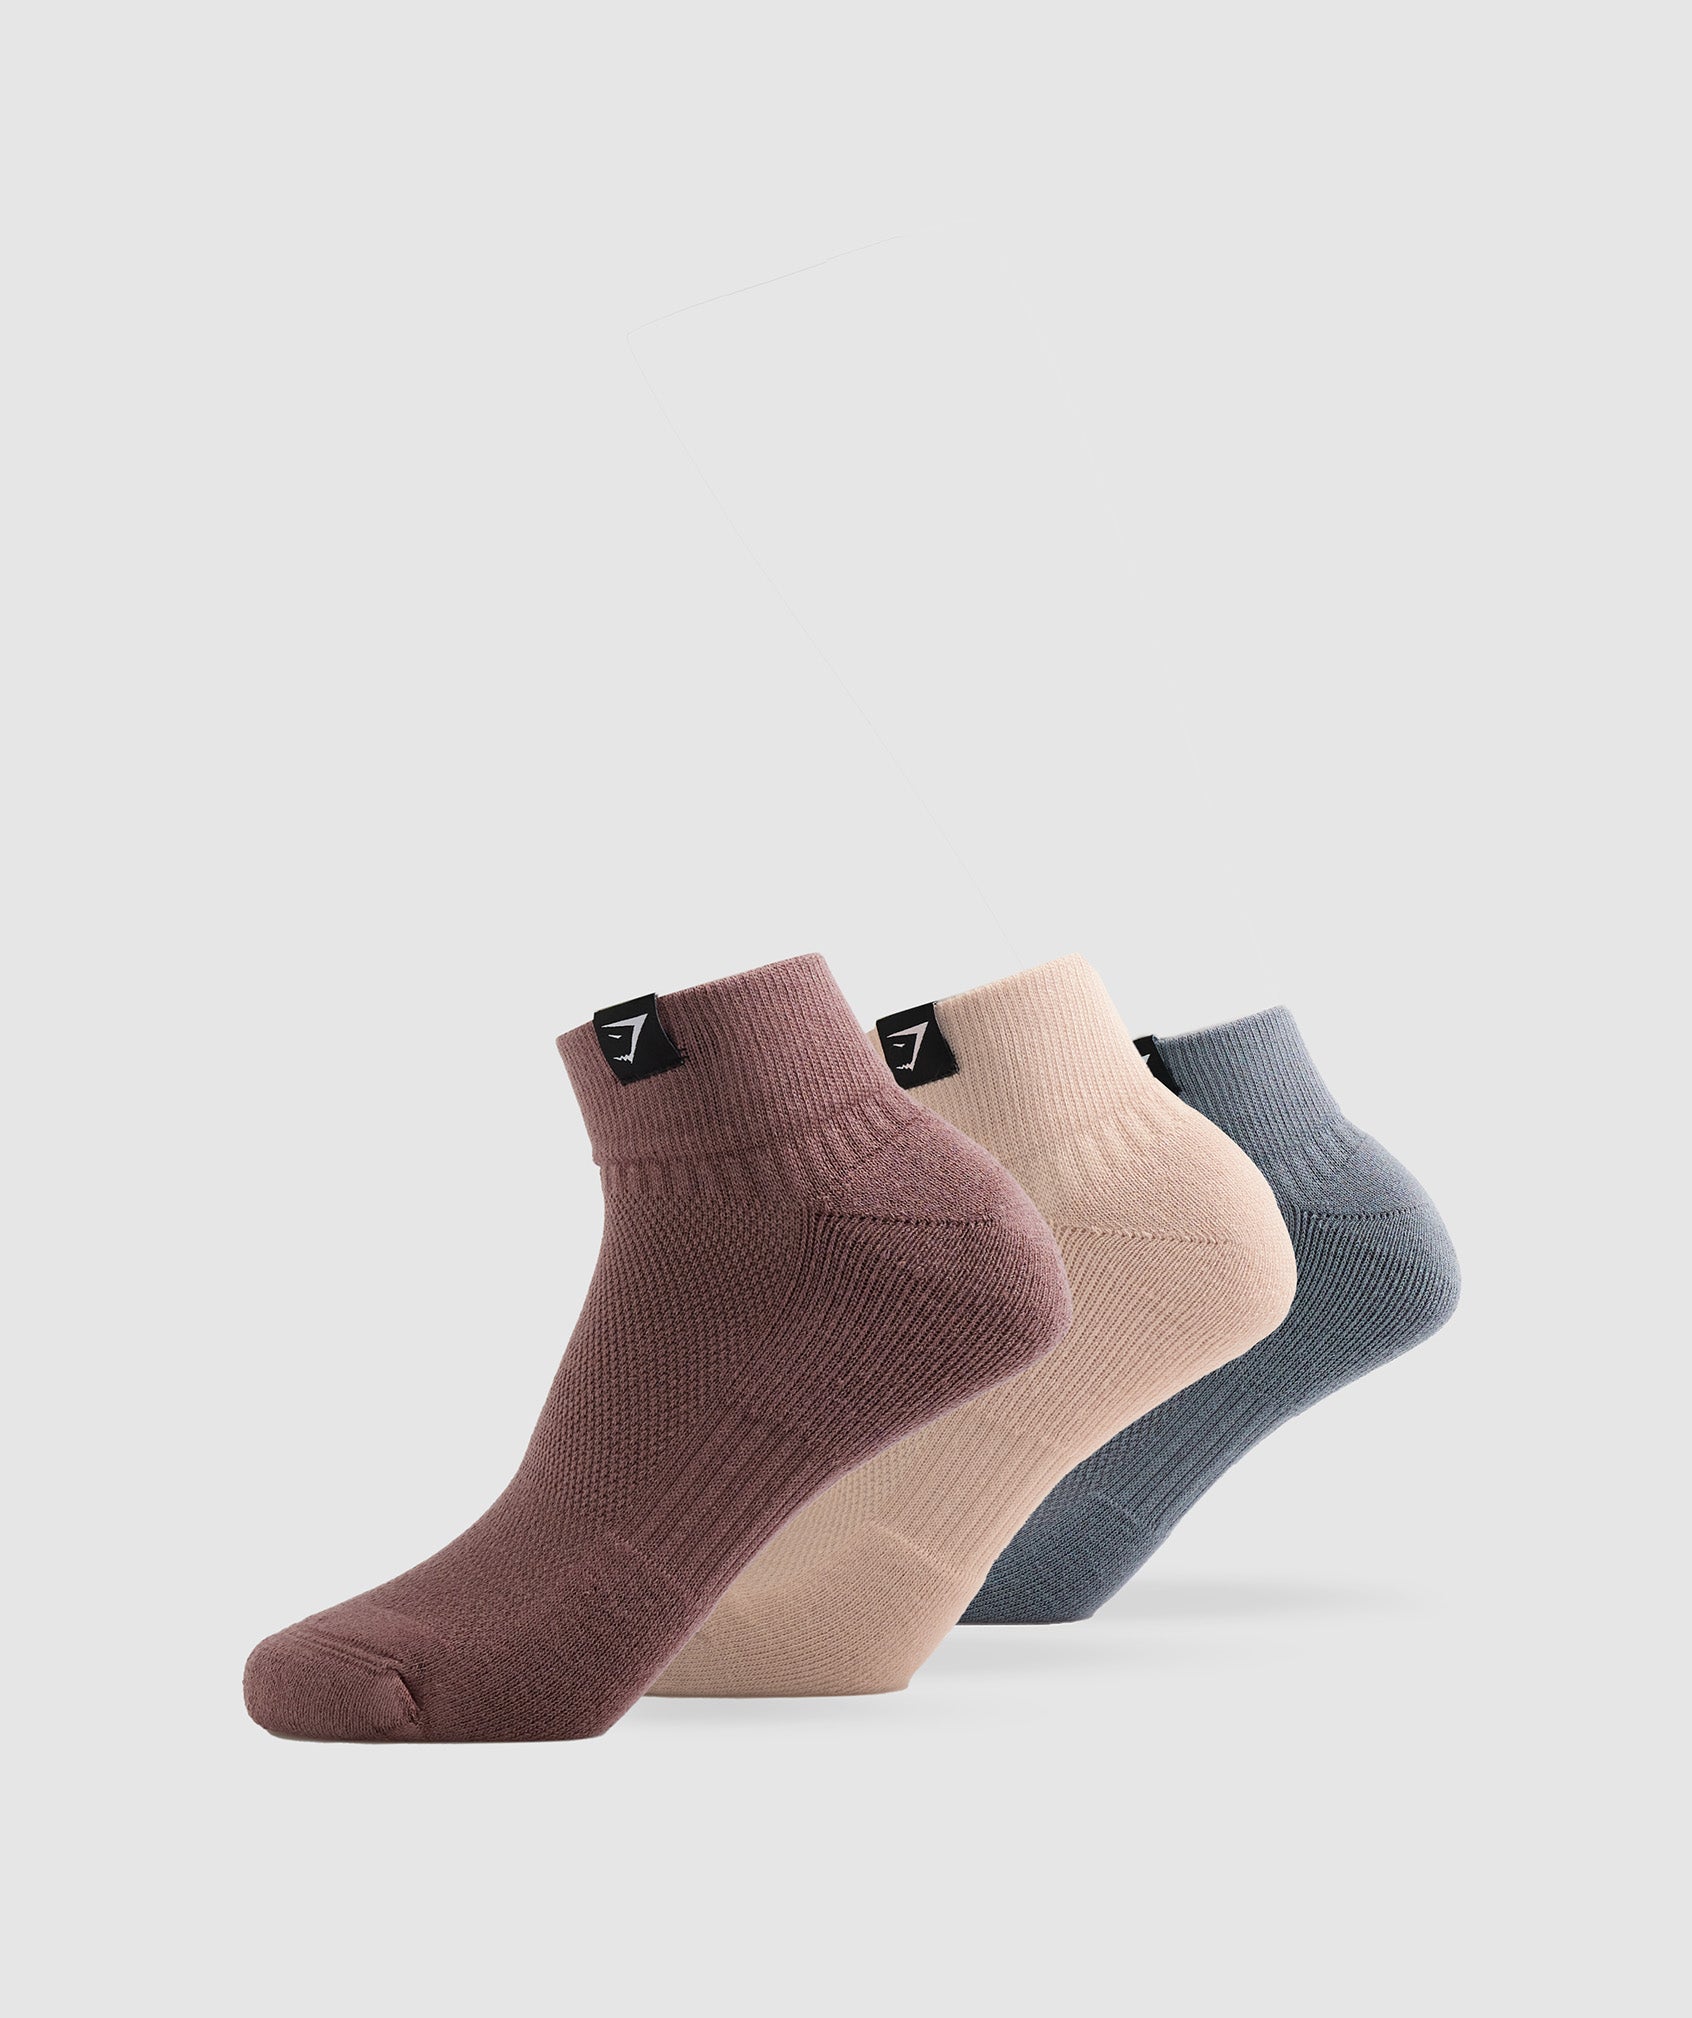 Woven Tab Quarter Socks 3pk in Misty Pink/Drift Grey/Maroon - view 1